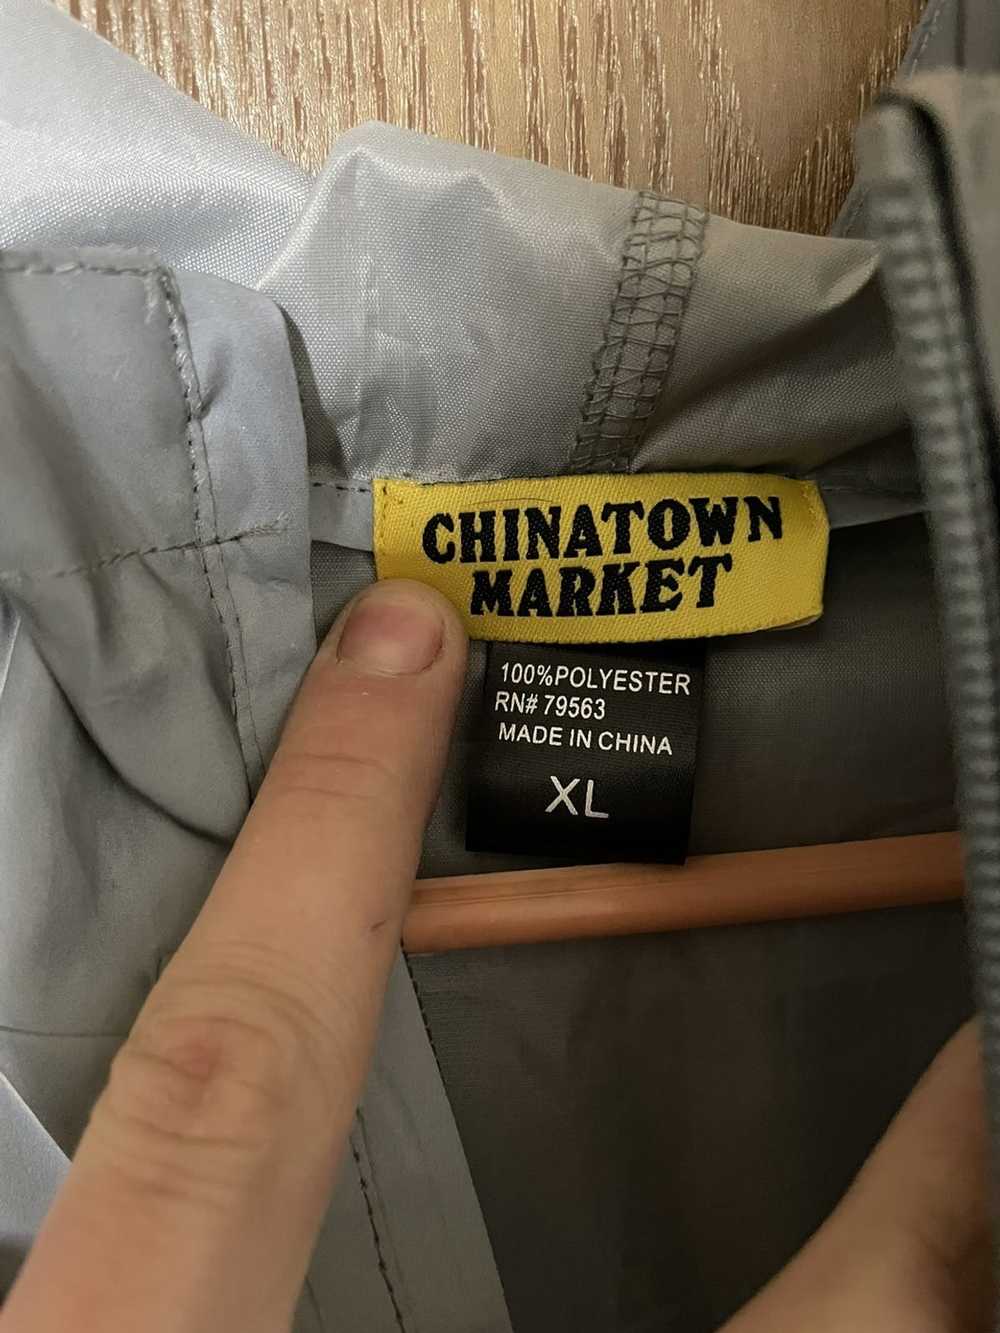 Market Chinatown market - image 6